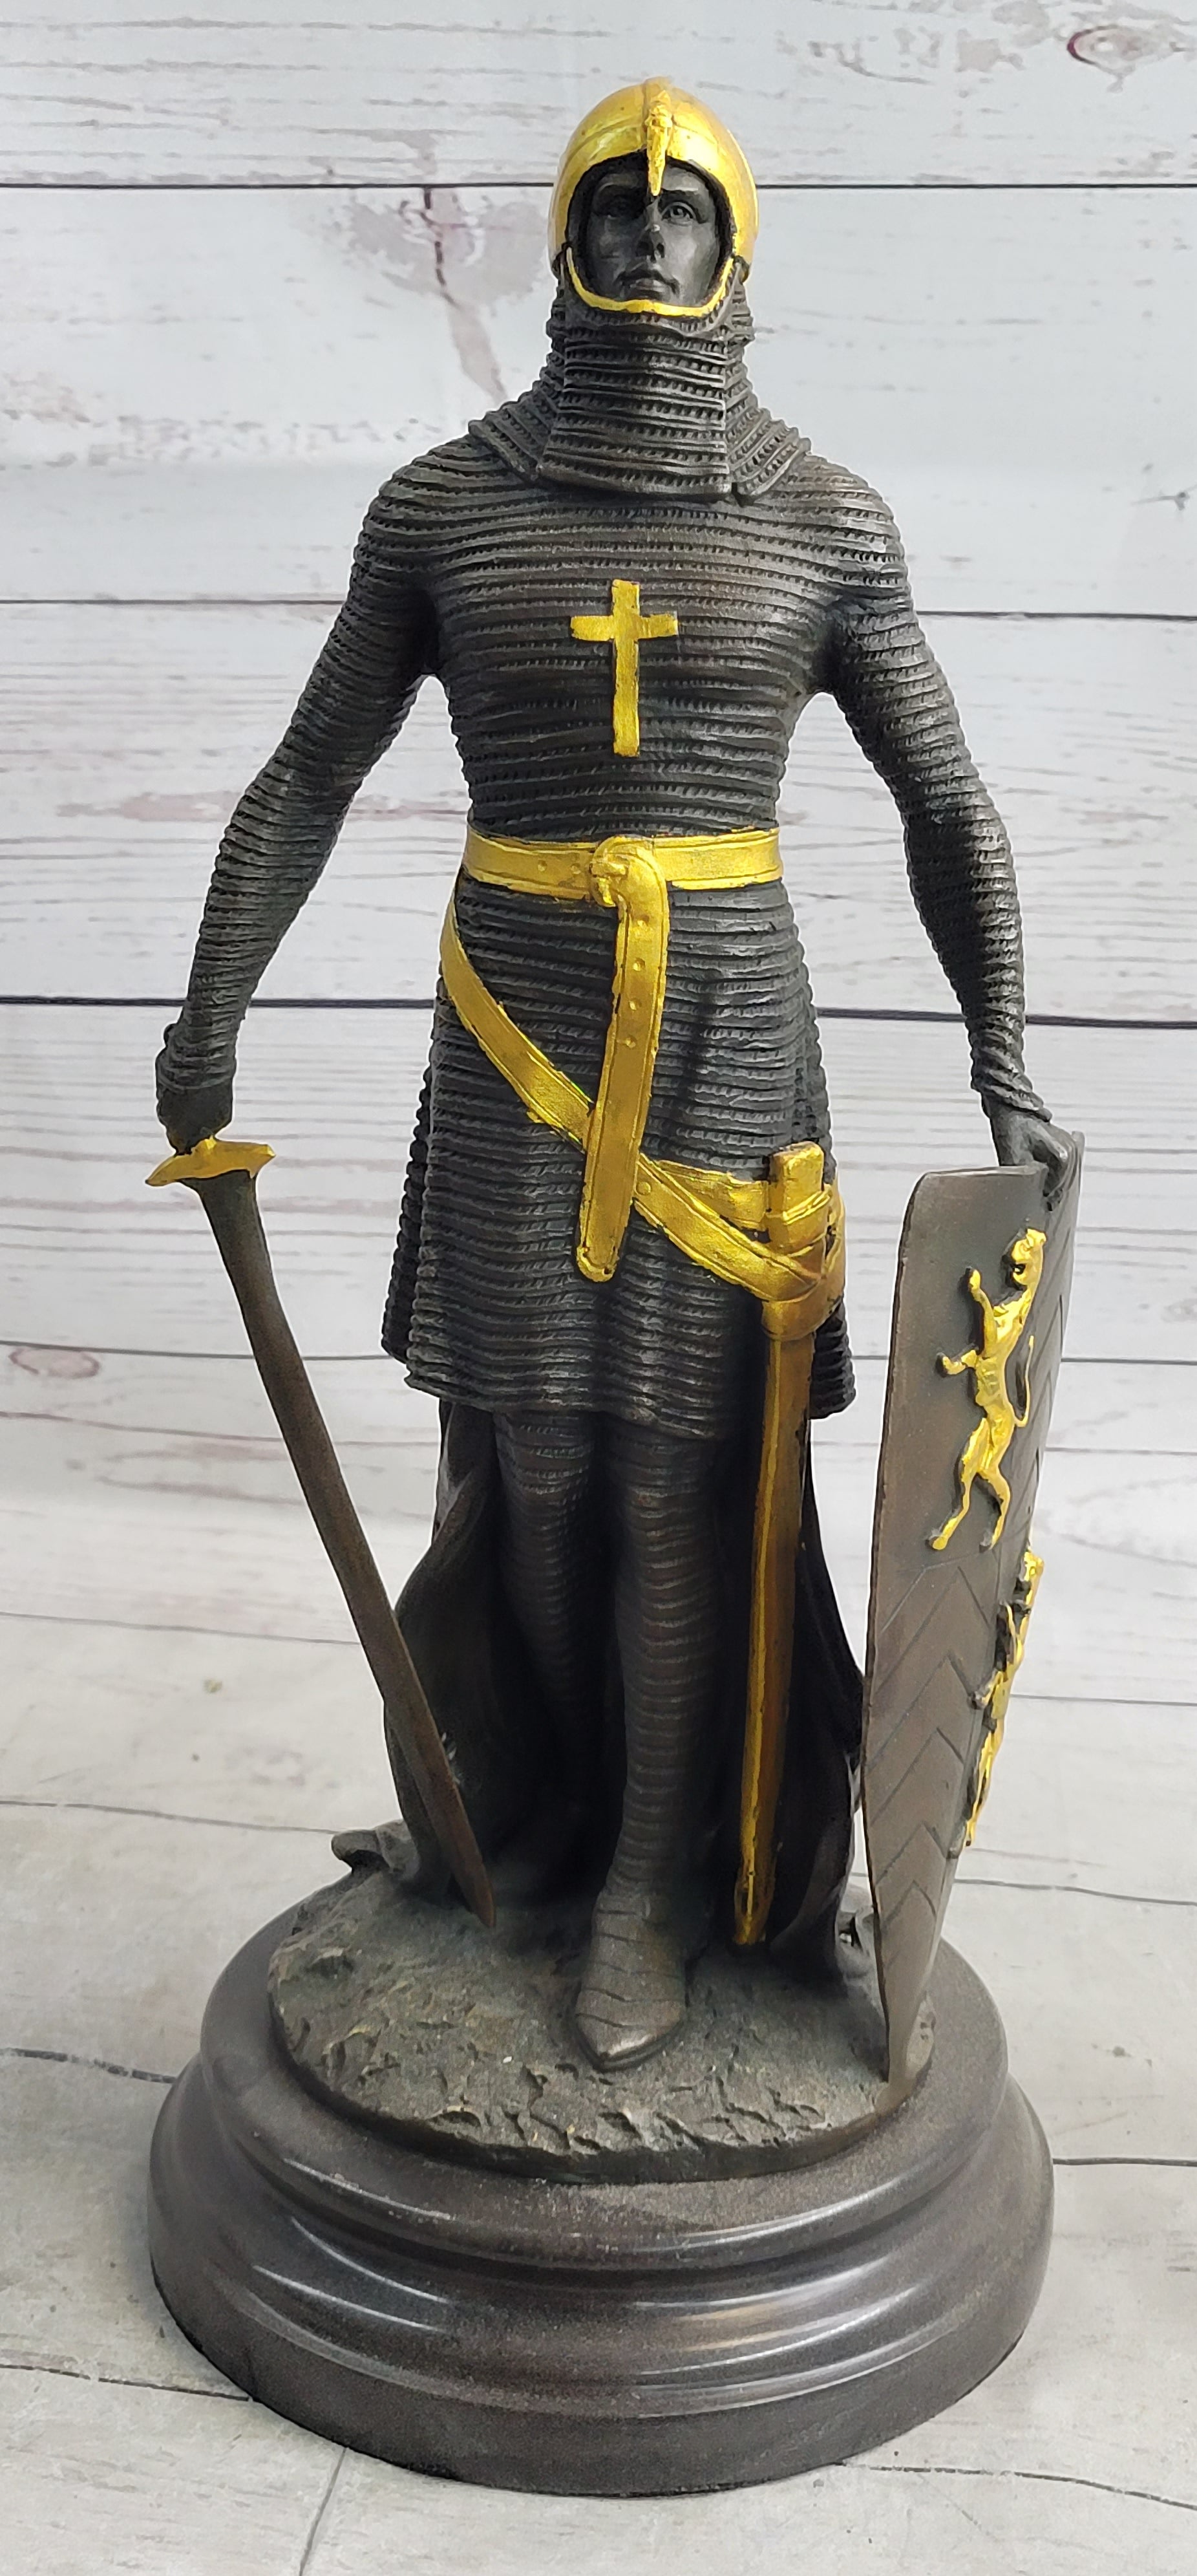 Handcrafted bronze sculpture SALE Art Warrior Knight Armor Base Marble Figurine